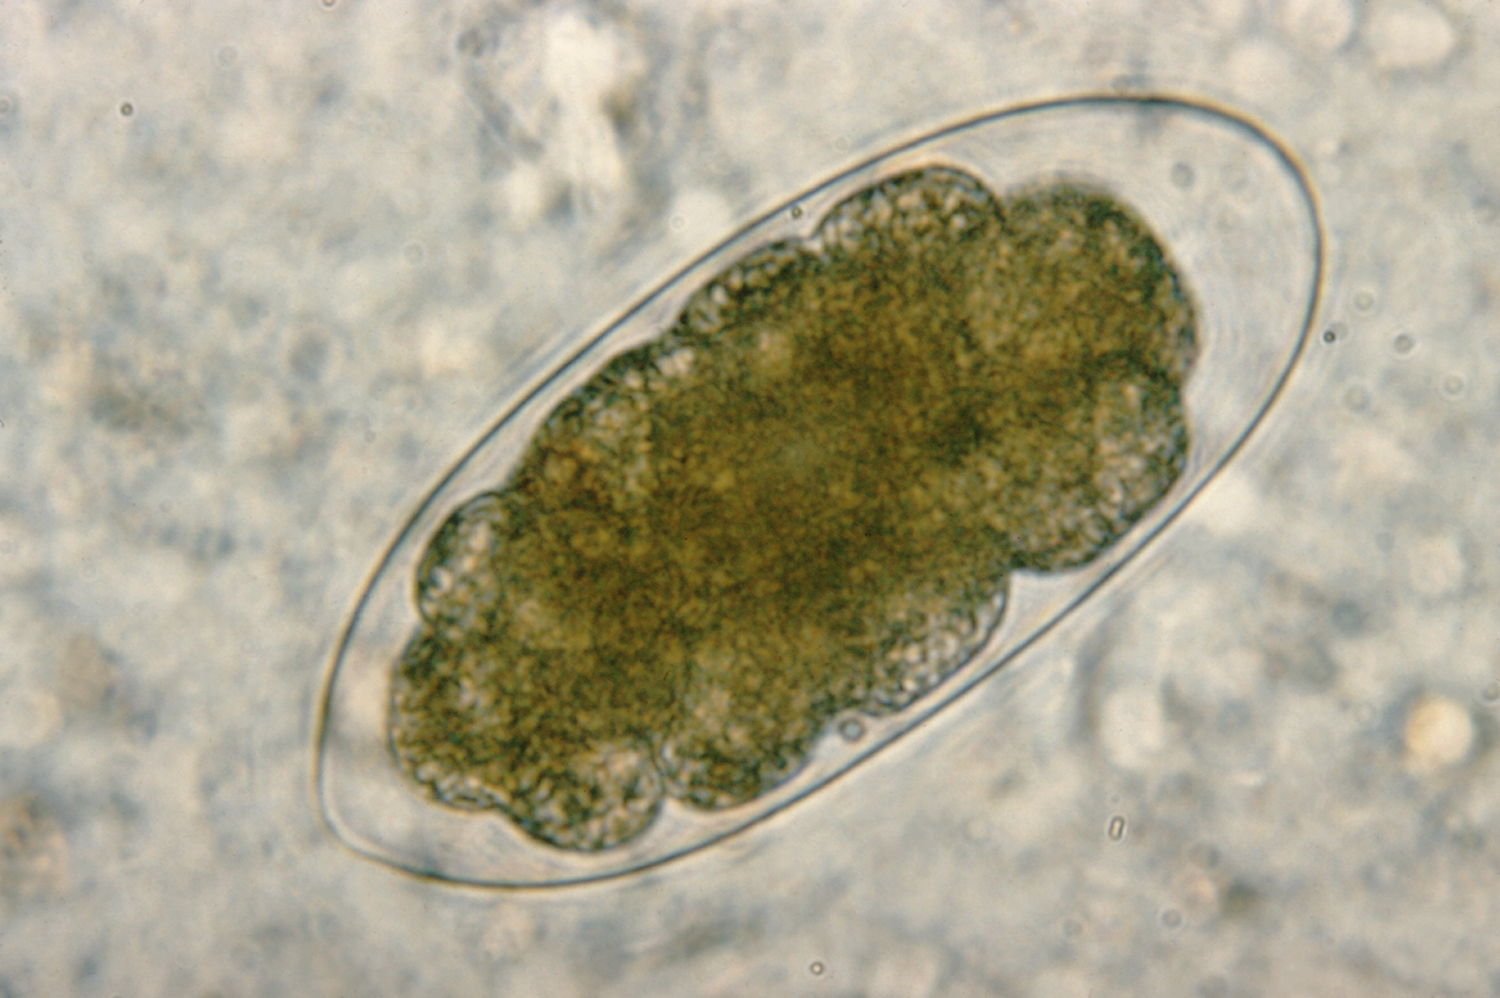 parasitic-trichostrongylus-nematode.jpg